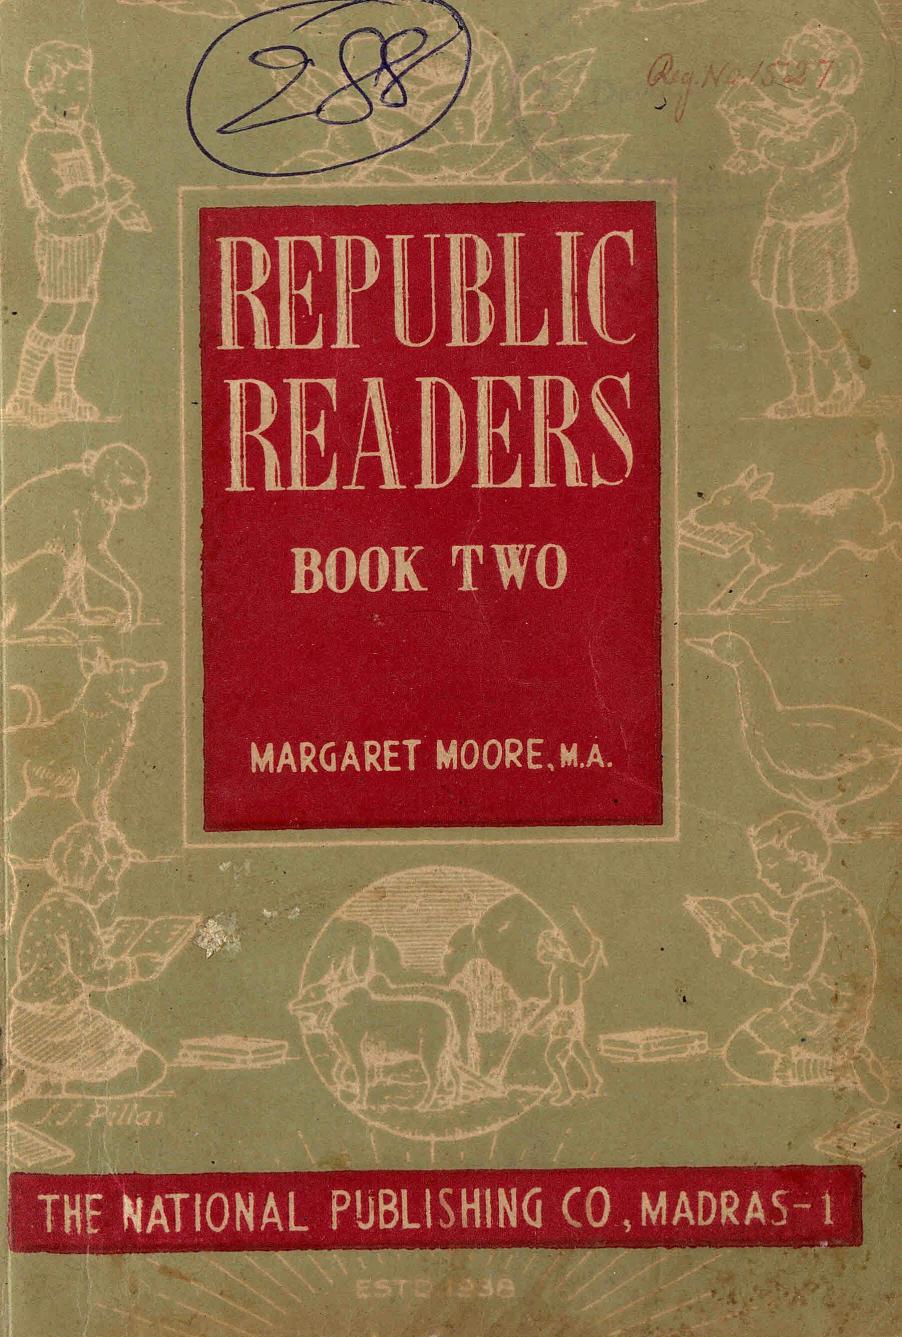  1959 - Republic Readers - Book 2 - Margaret Moore